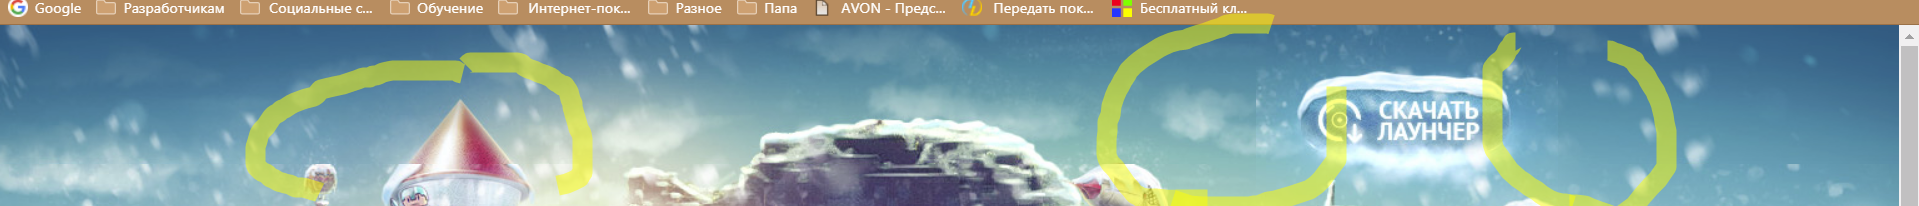 Grand-Mine.ru: Кривая пикча в шапке сайта